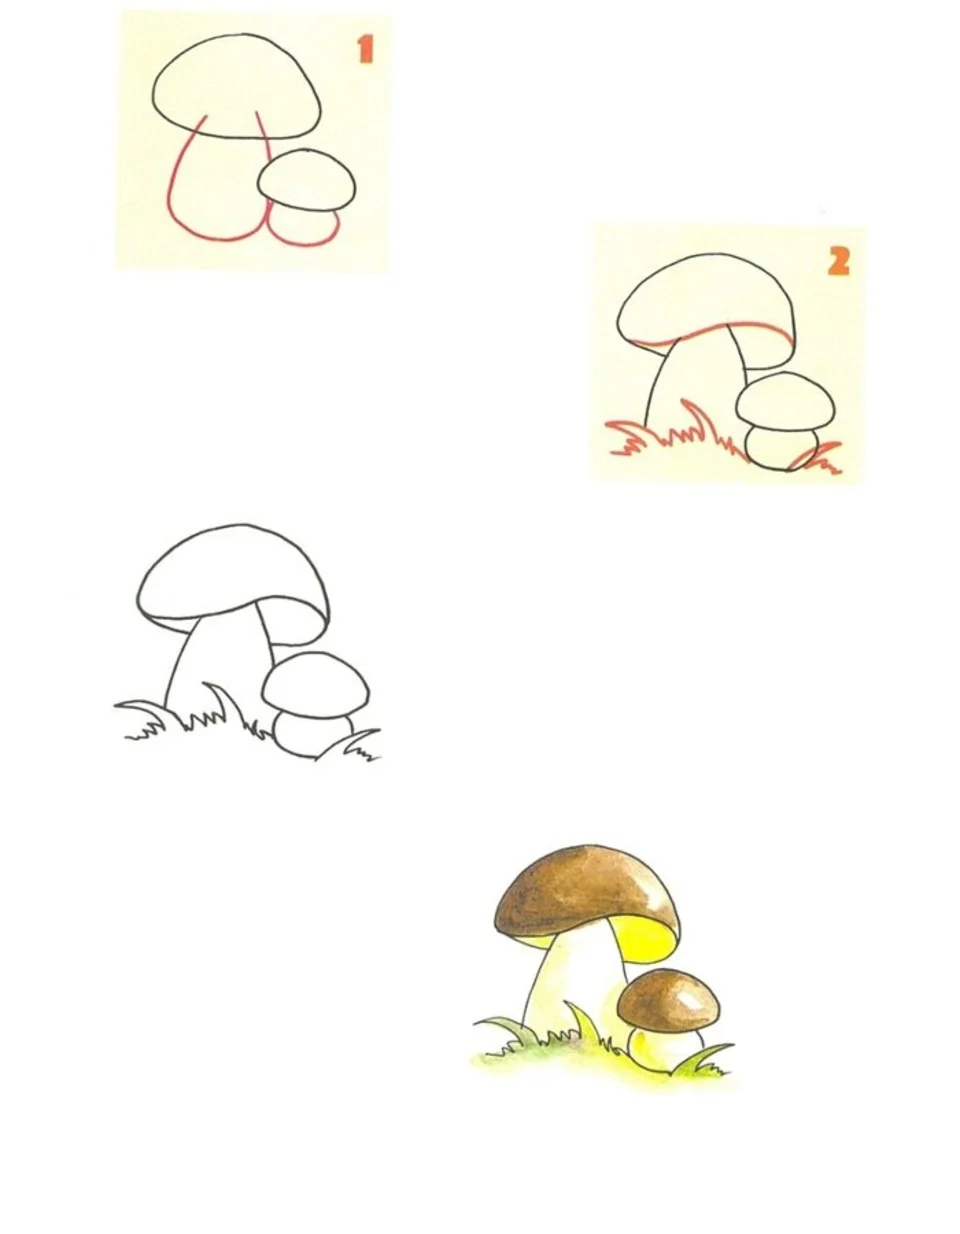 Поэтапное рисование гриба